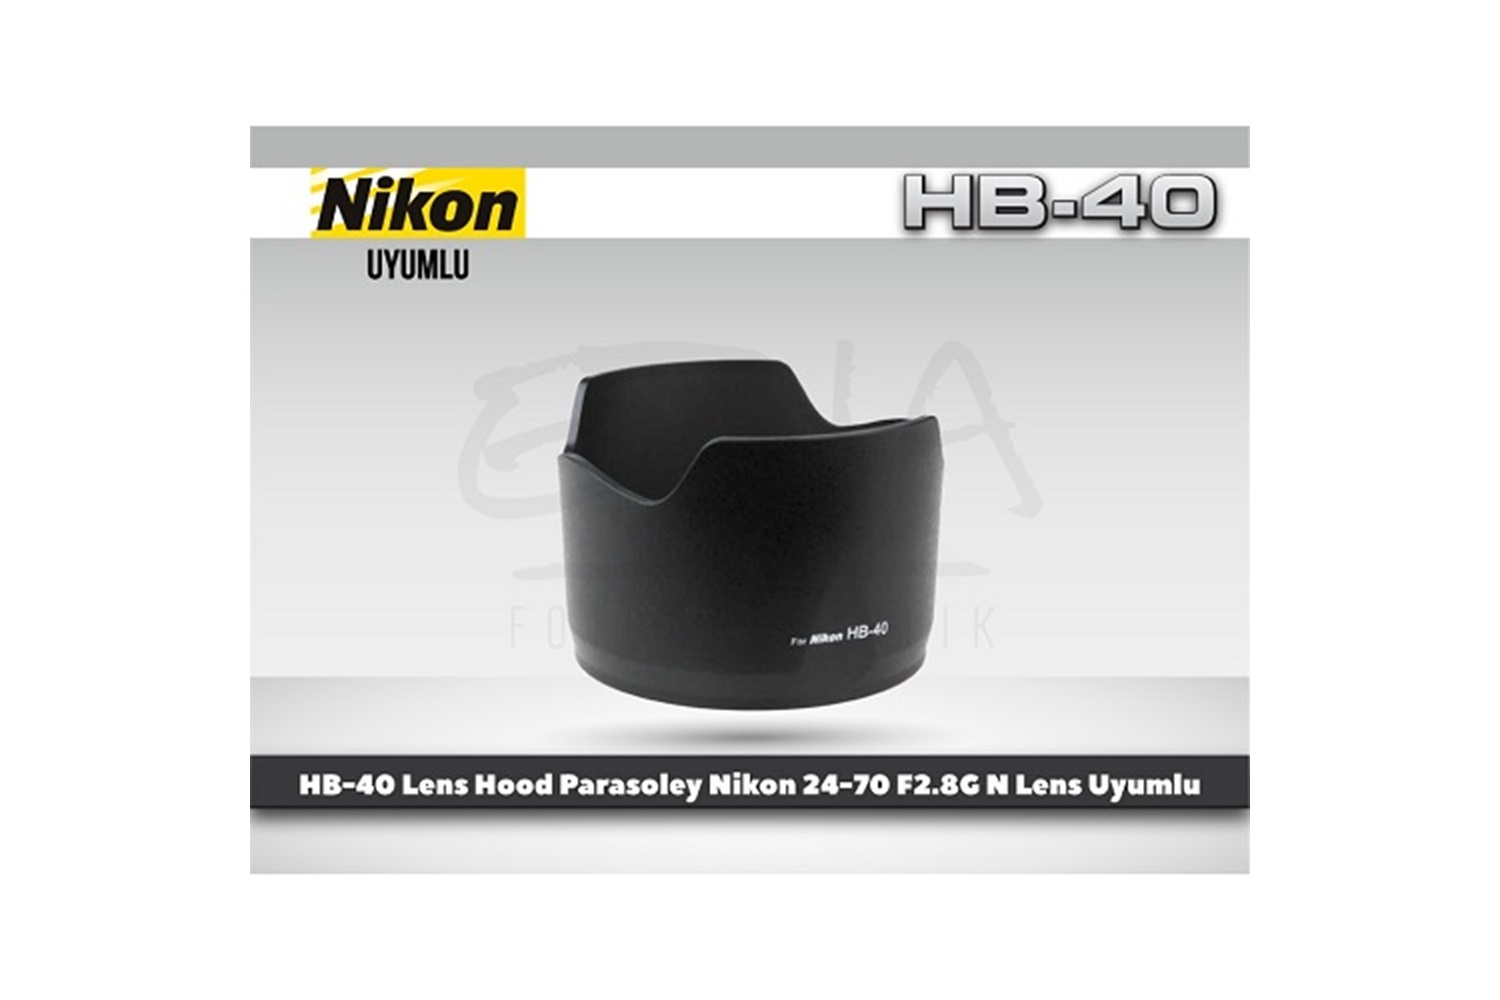 Tewise Nikon HB-40 Parasoley 24-70mm F2.8 Lens Uyumlu